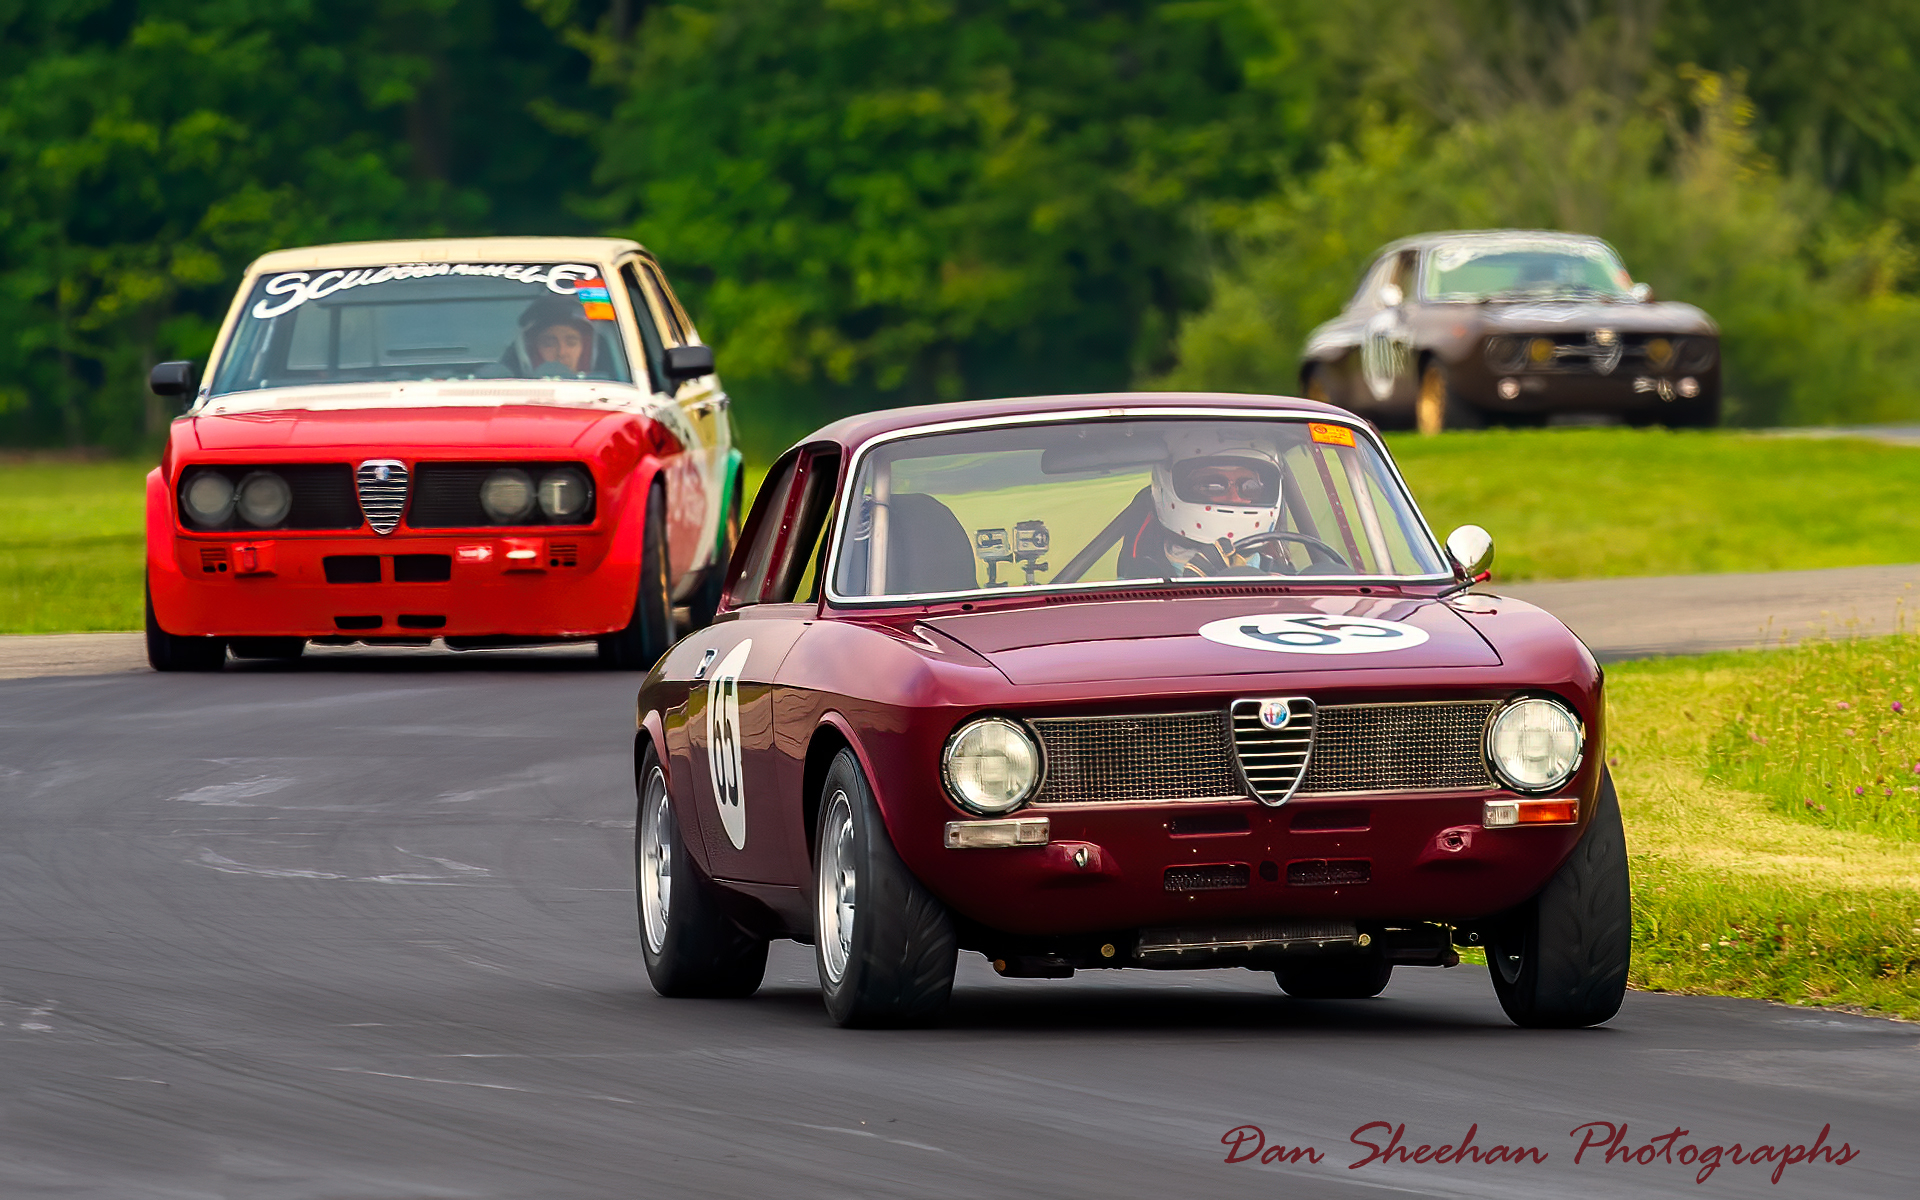 Vintage Alfa Romeos at speed : Cars : Dan Sheehan Photographs - Fine Art Stock Photography